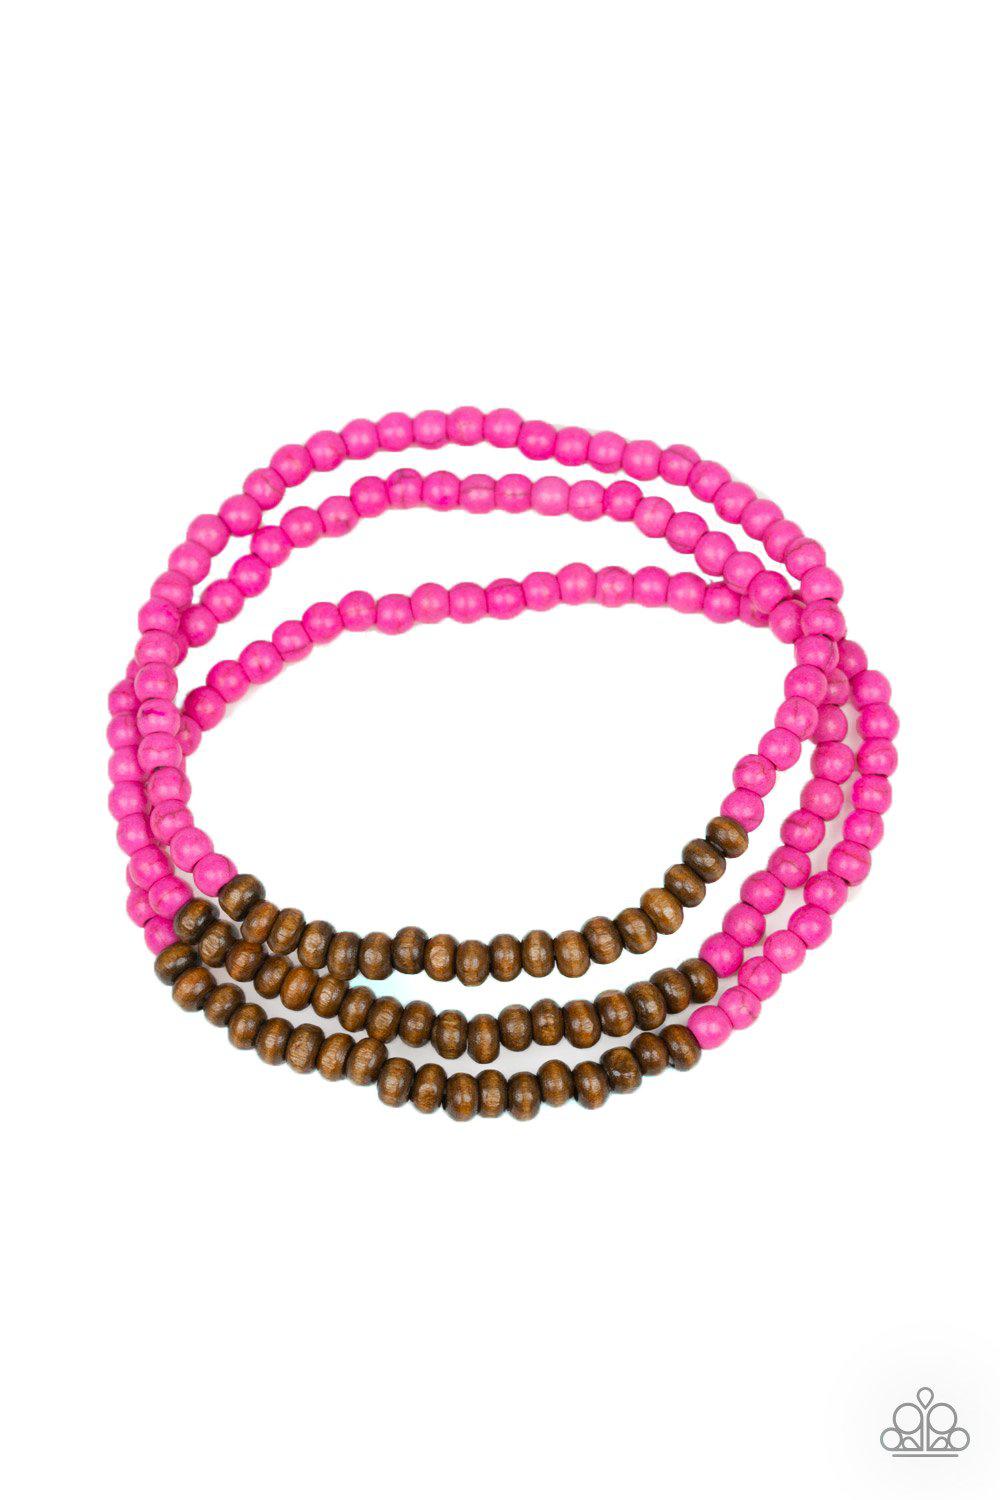 Woodland Wanderer Pink Stone and Wood Bead Stretch Bracelet Set - Paparazzi Accessories-CarasShop.com - $5 Jewelry by Cara Jewels